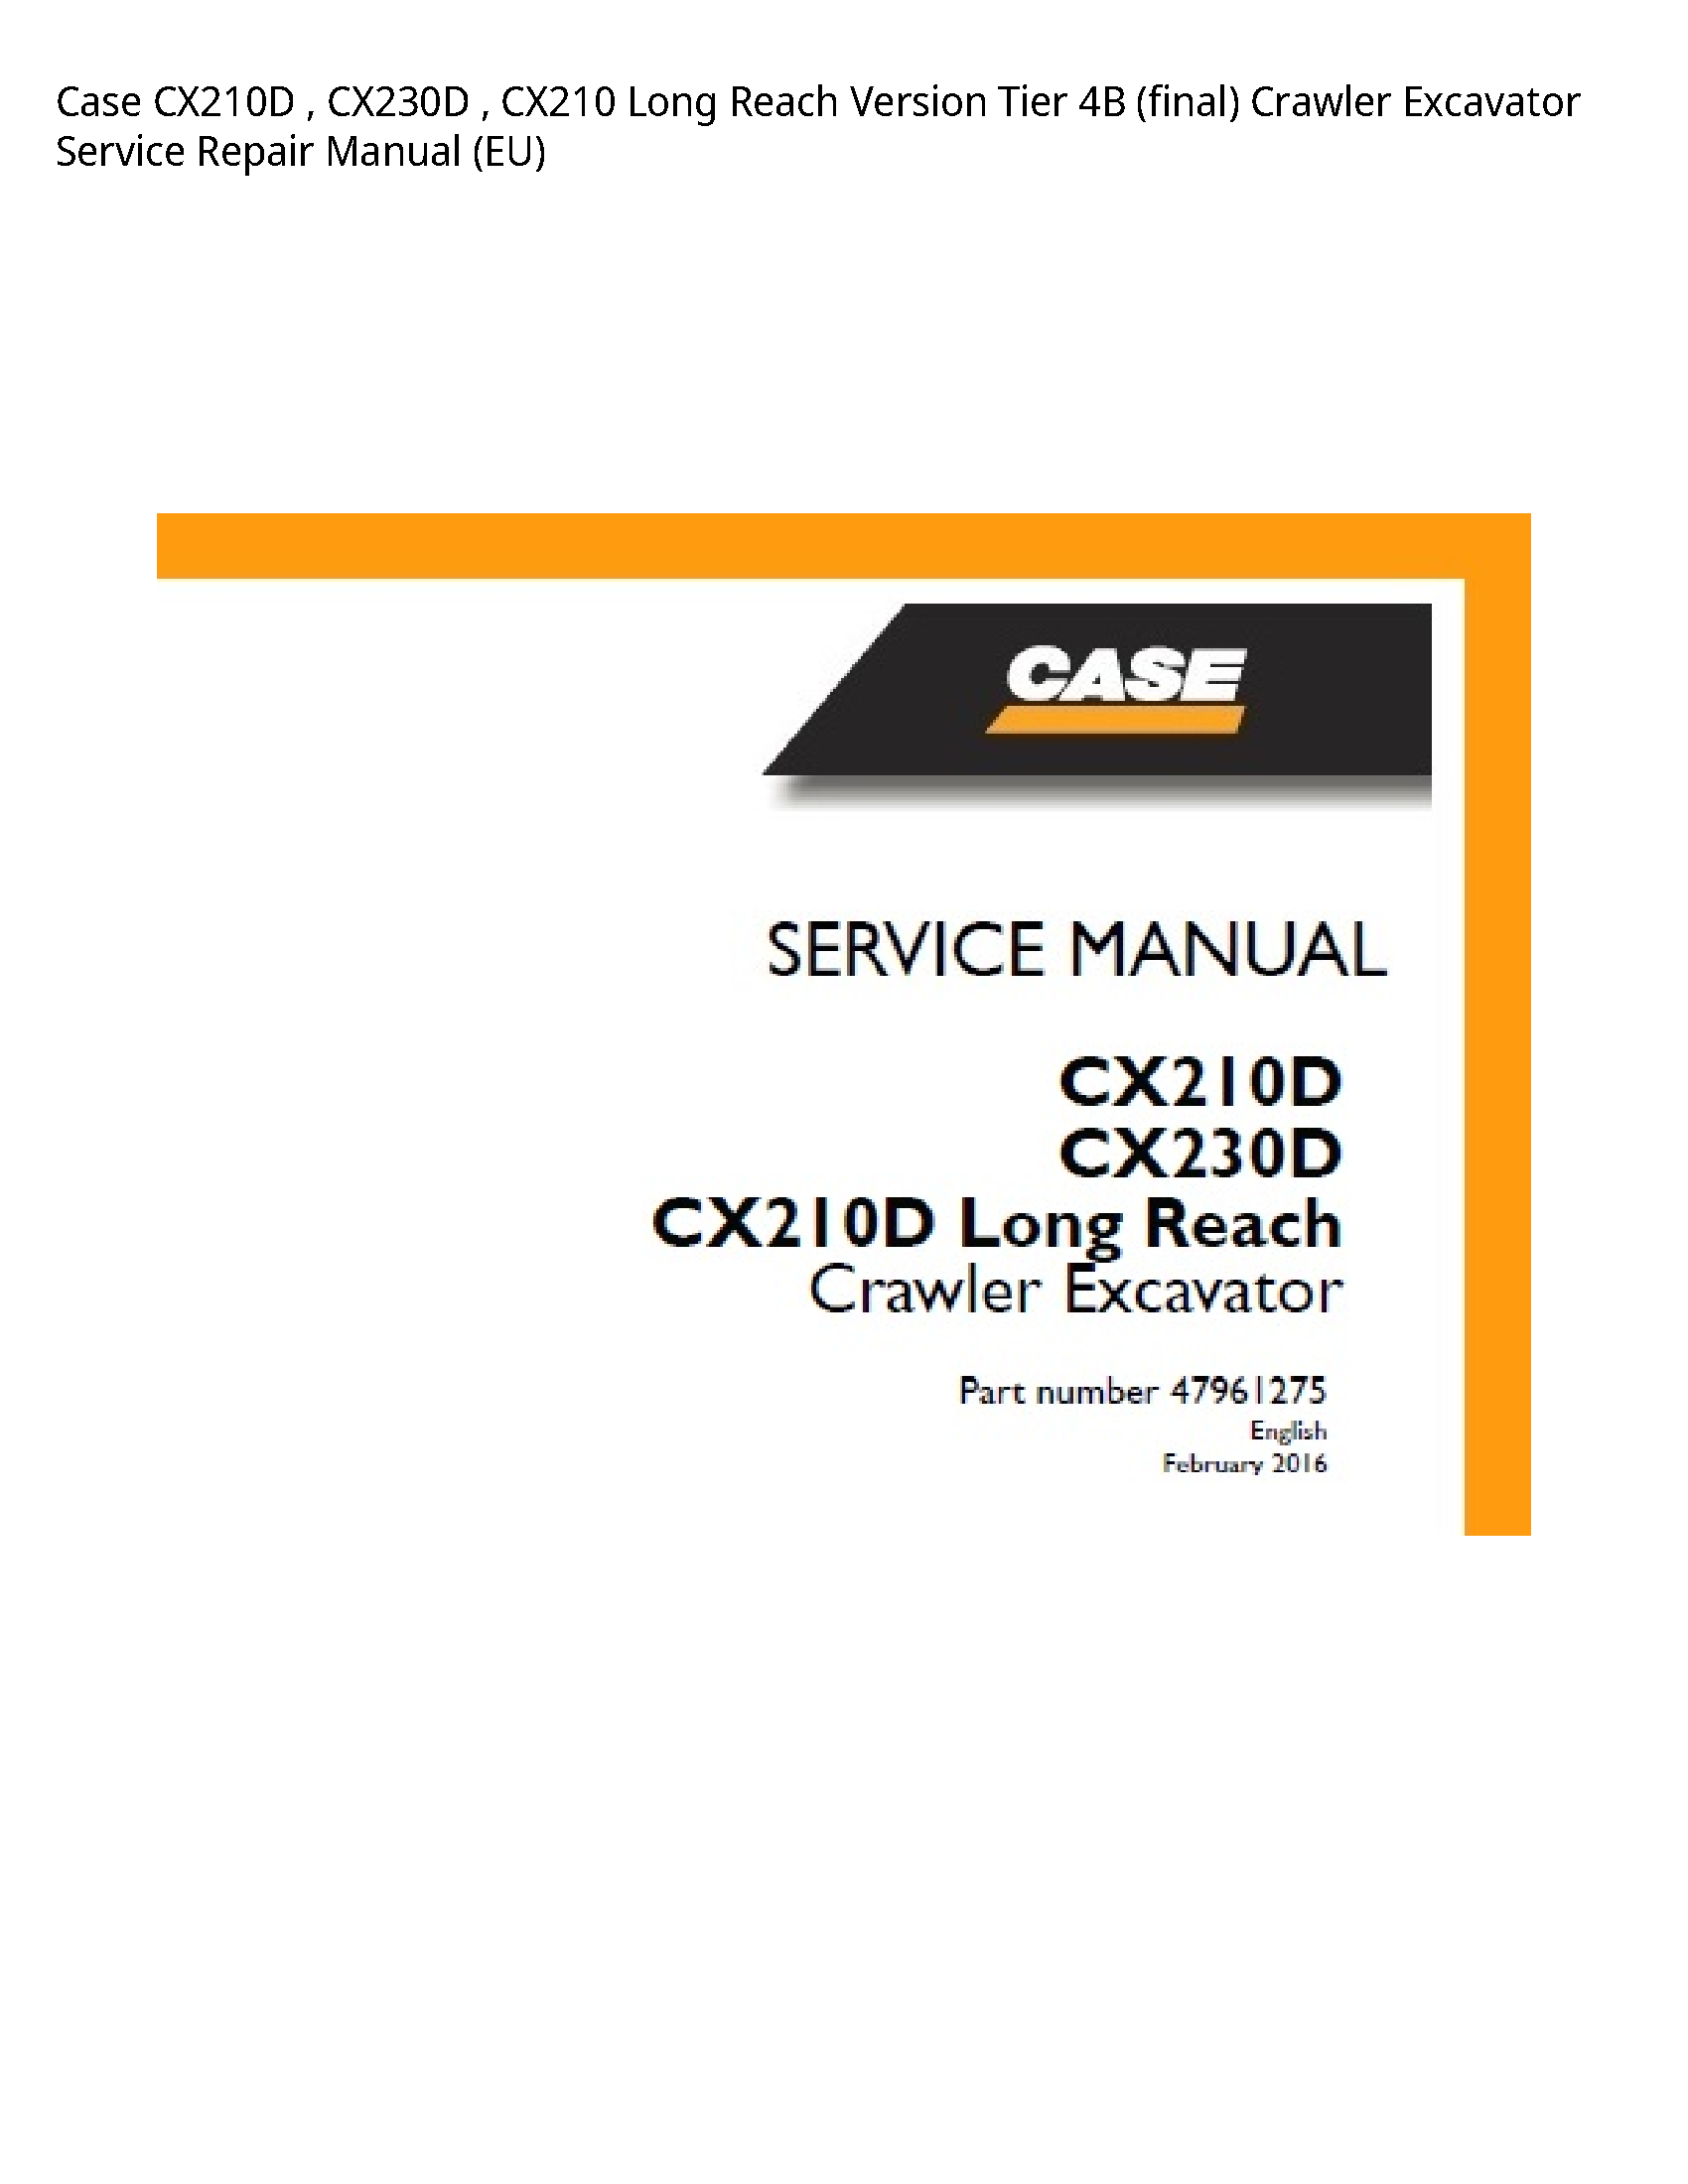 Case/Case IH CX210D Long Reach Version Tier (final) Crawler Excavator manual